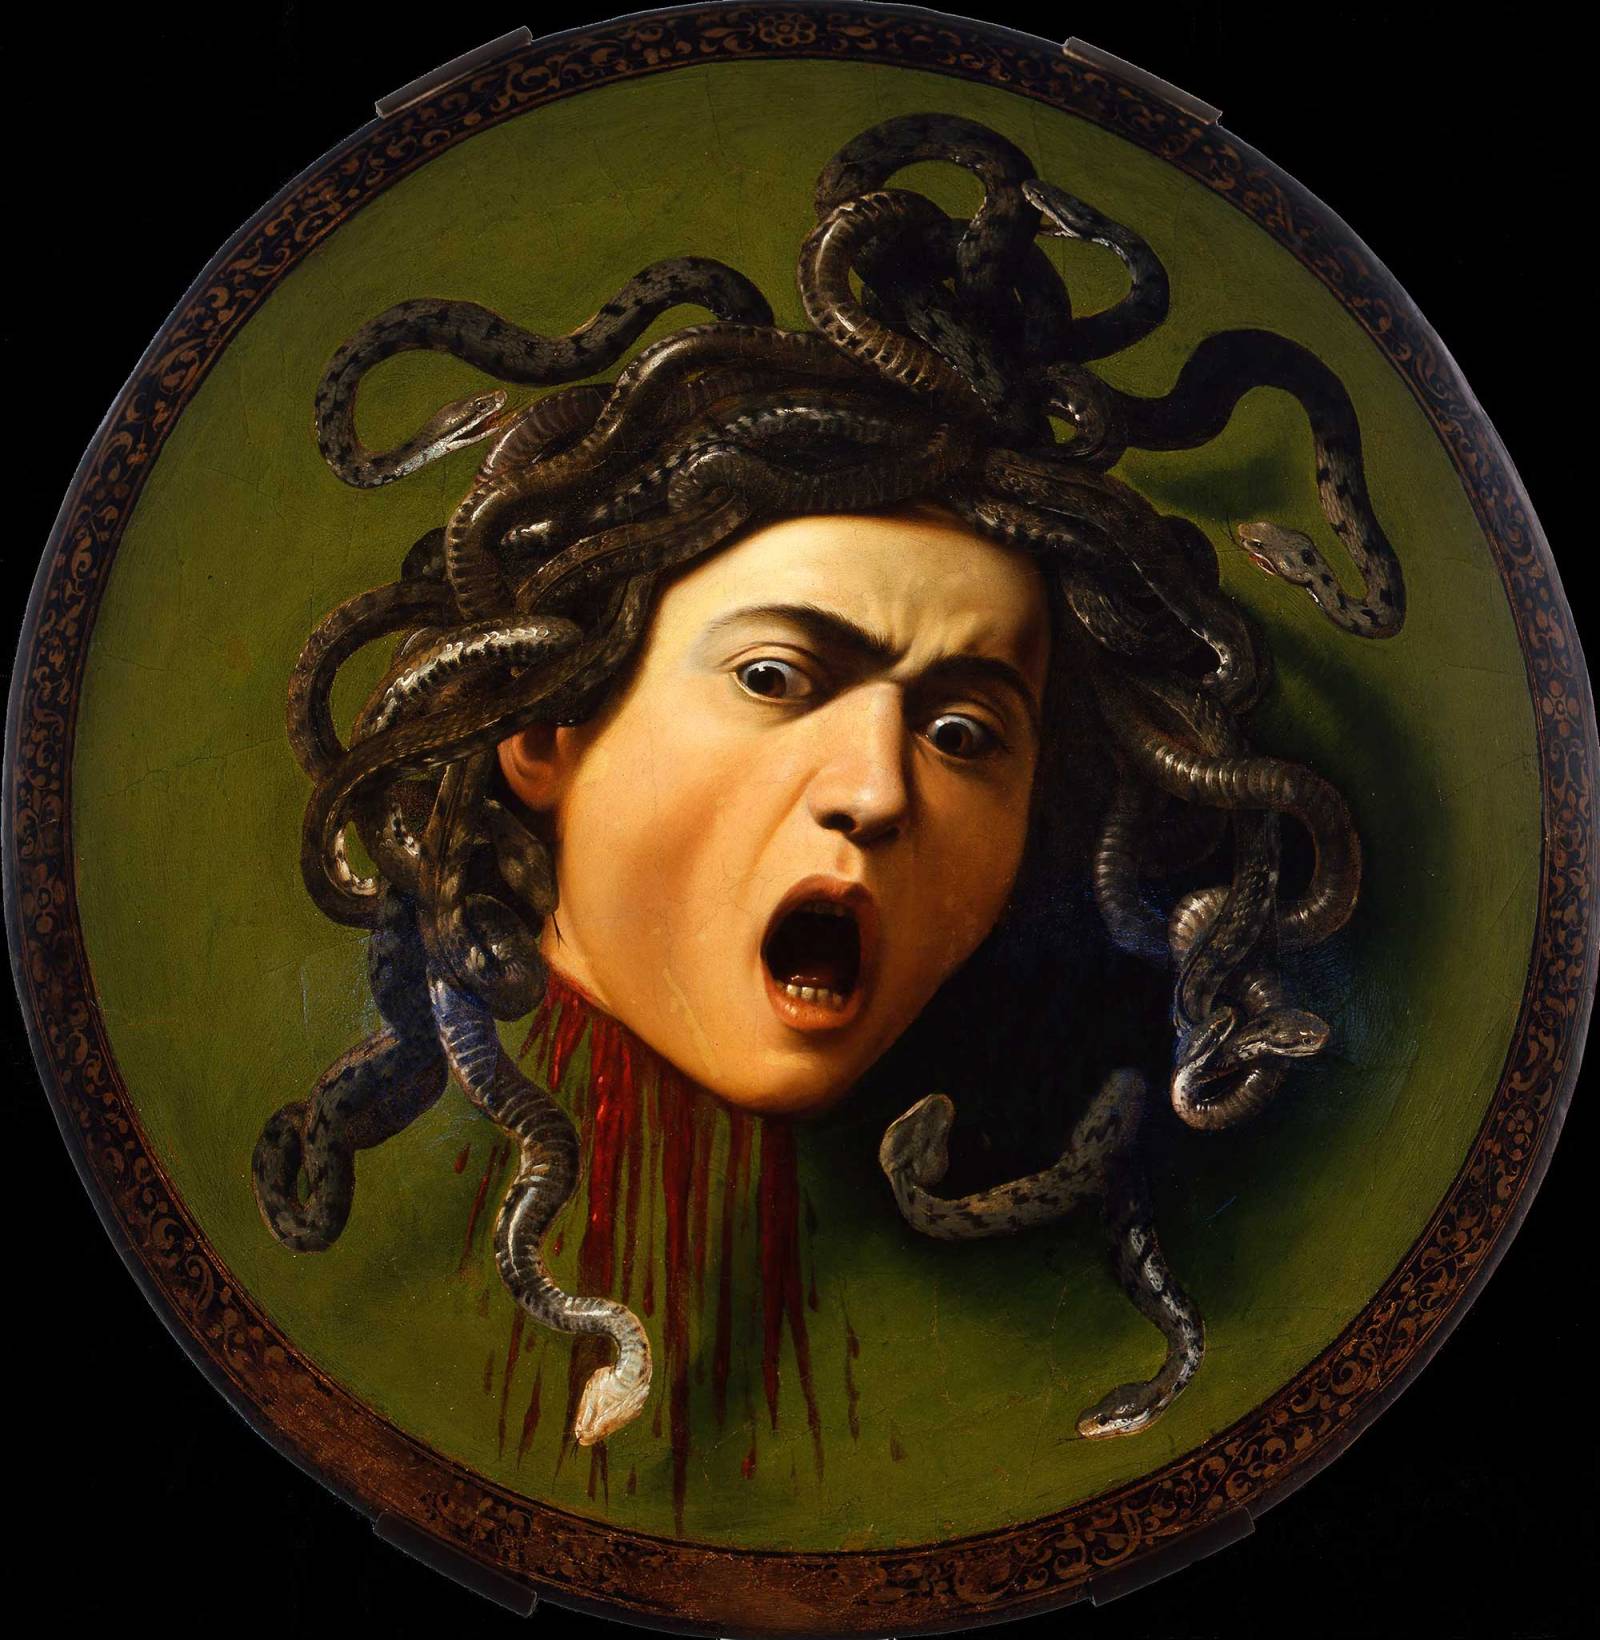 Głowa Meduzy, Caravaggio, 1595-1598, Galleria degli Uffizi (Fot. VCG Wilson/Corbis via Getty Images)